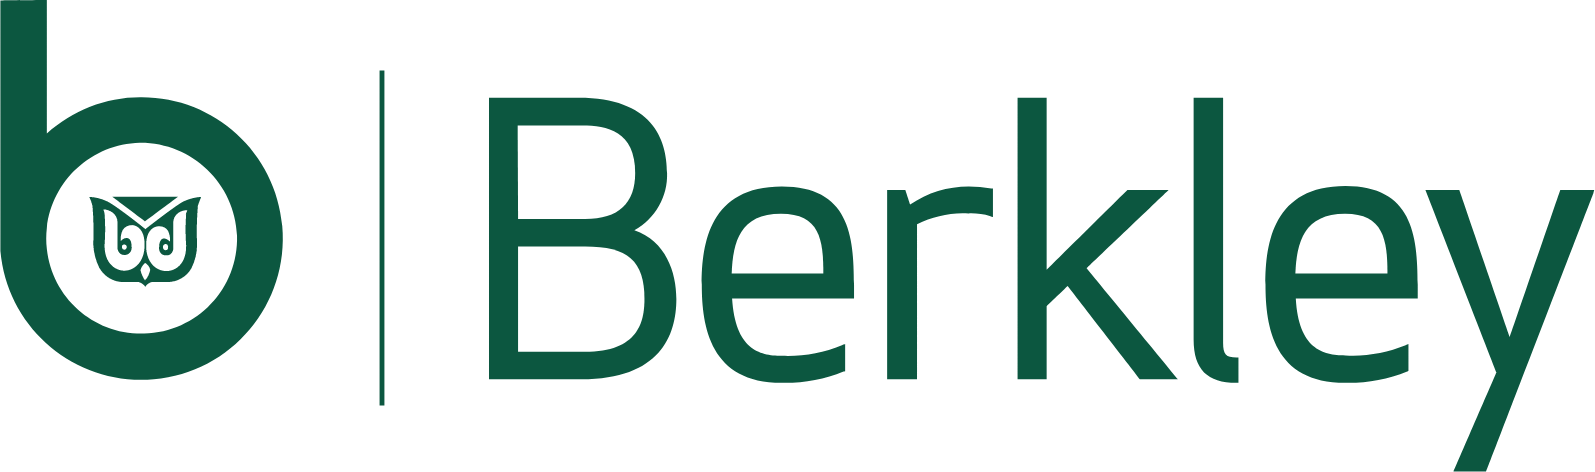 W. R. Berkley logo large (transparent PNG)